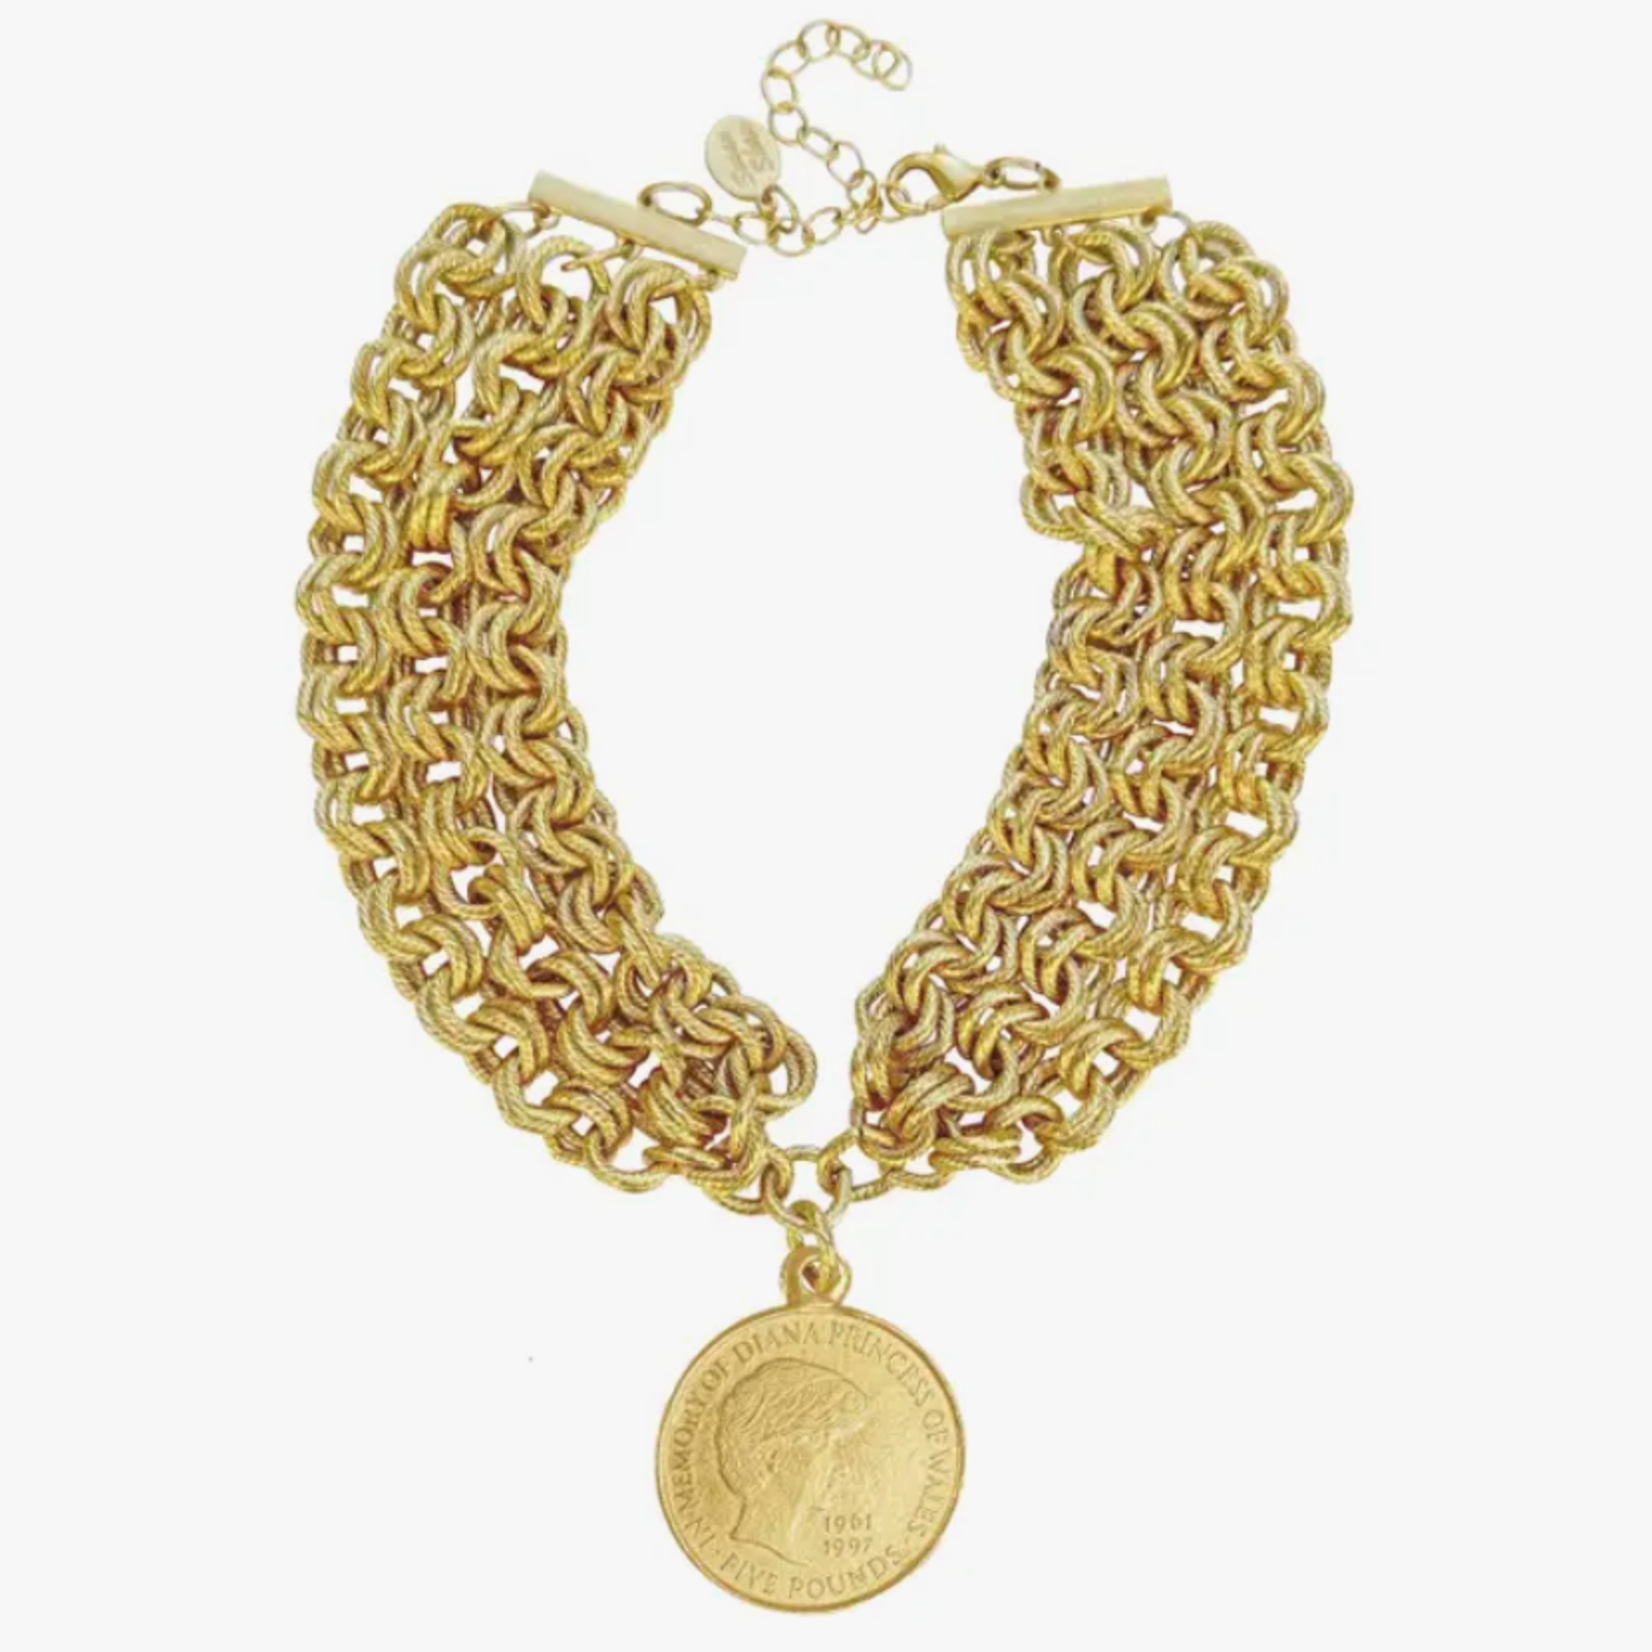 susan shaw Triple Strand Princess Diana Coin Necklace